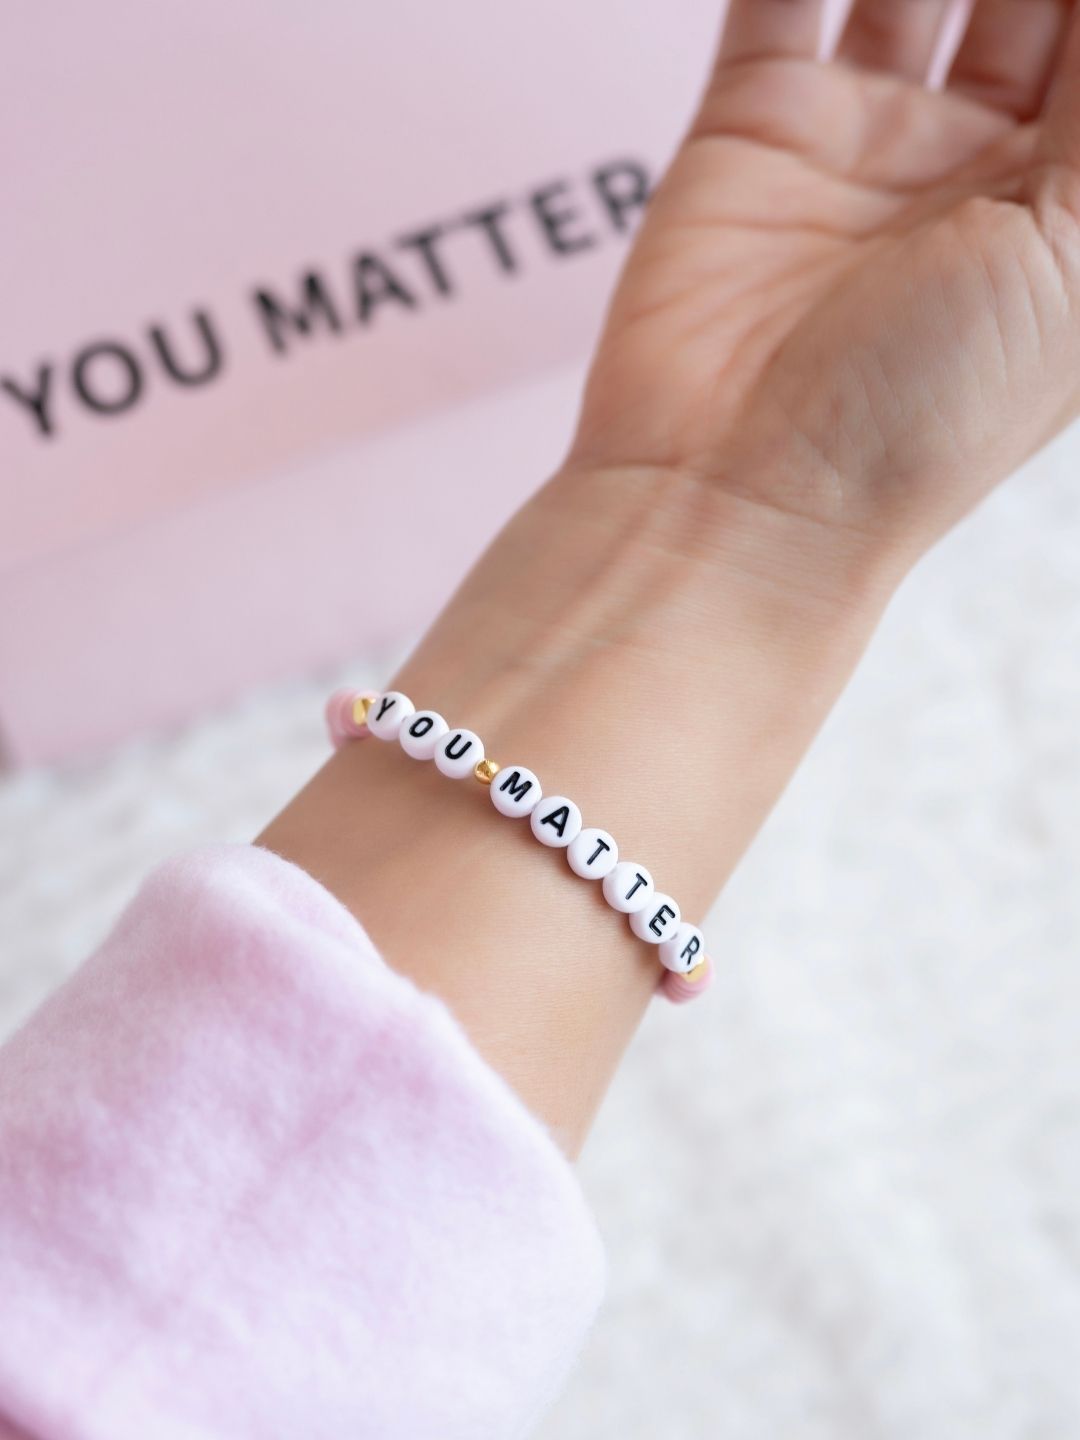 YOU MATTER | Bracelet